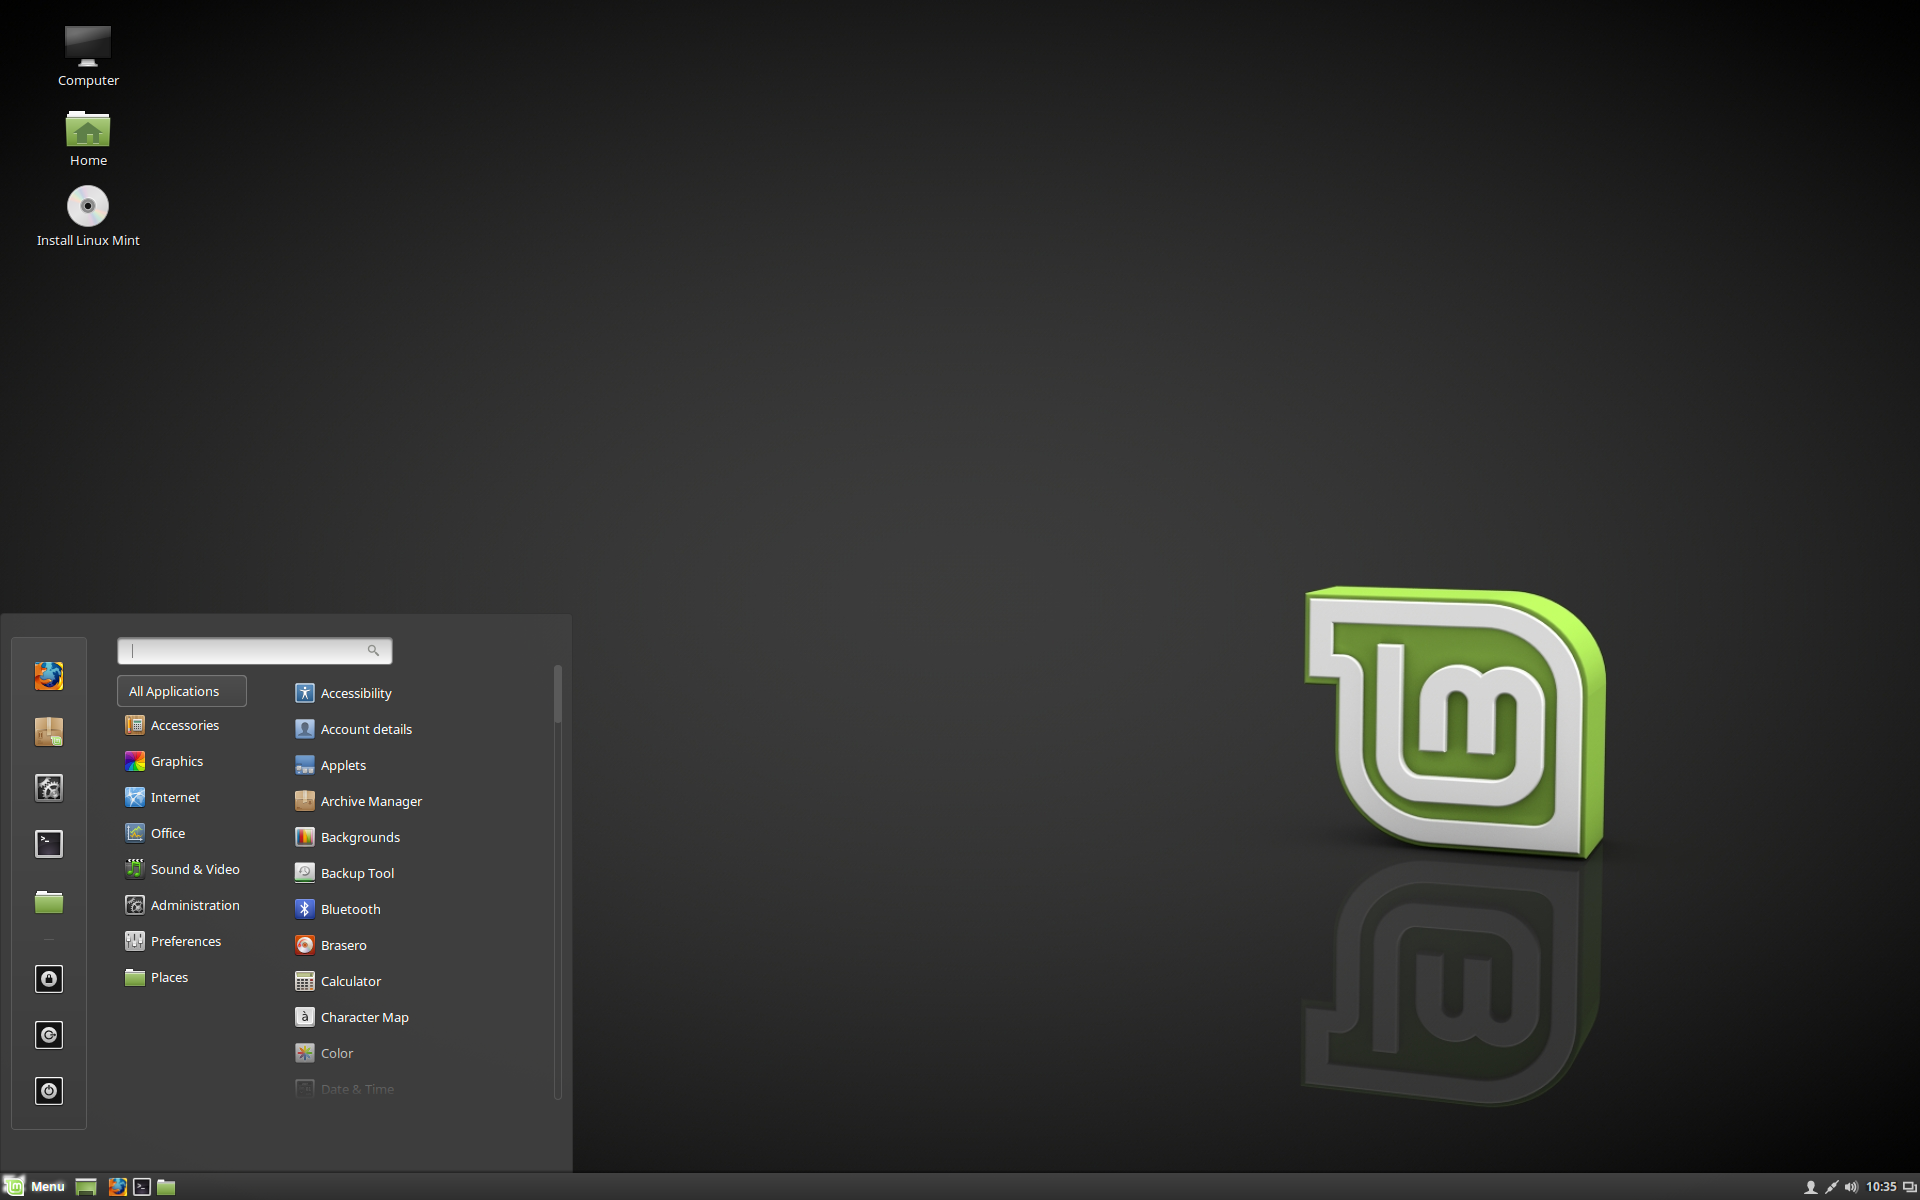 Linux mint debian edition iso download windows 7